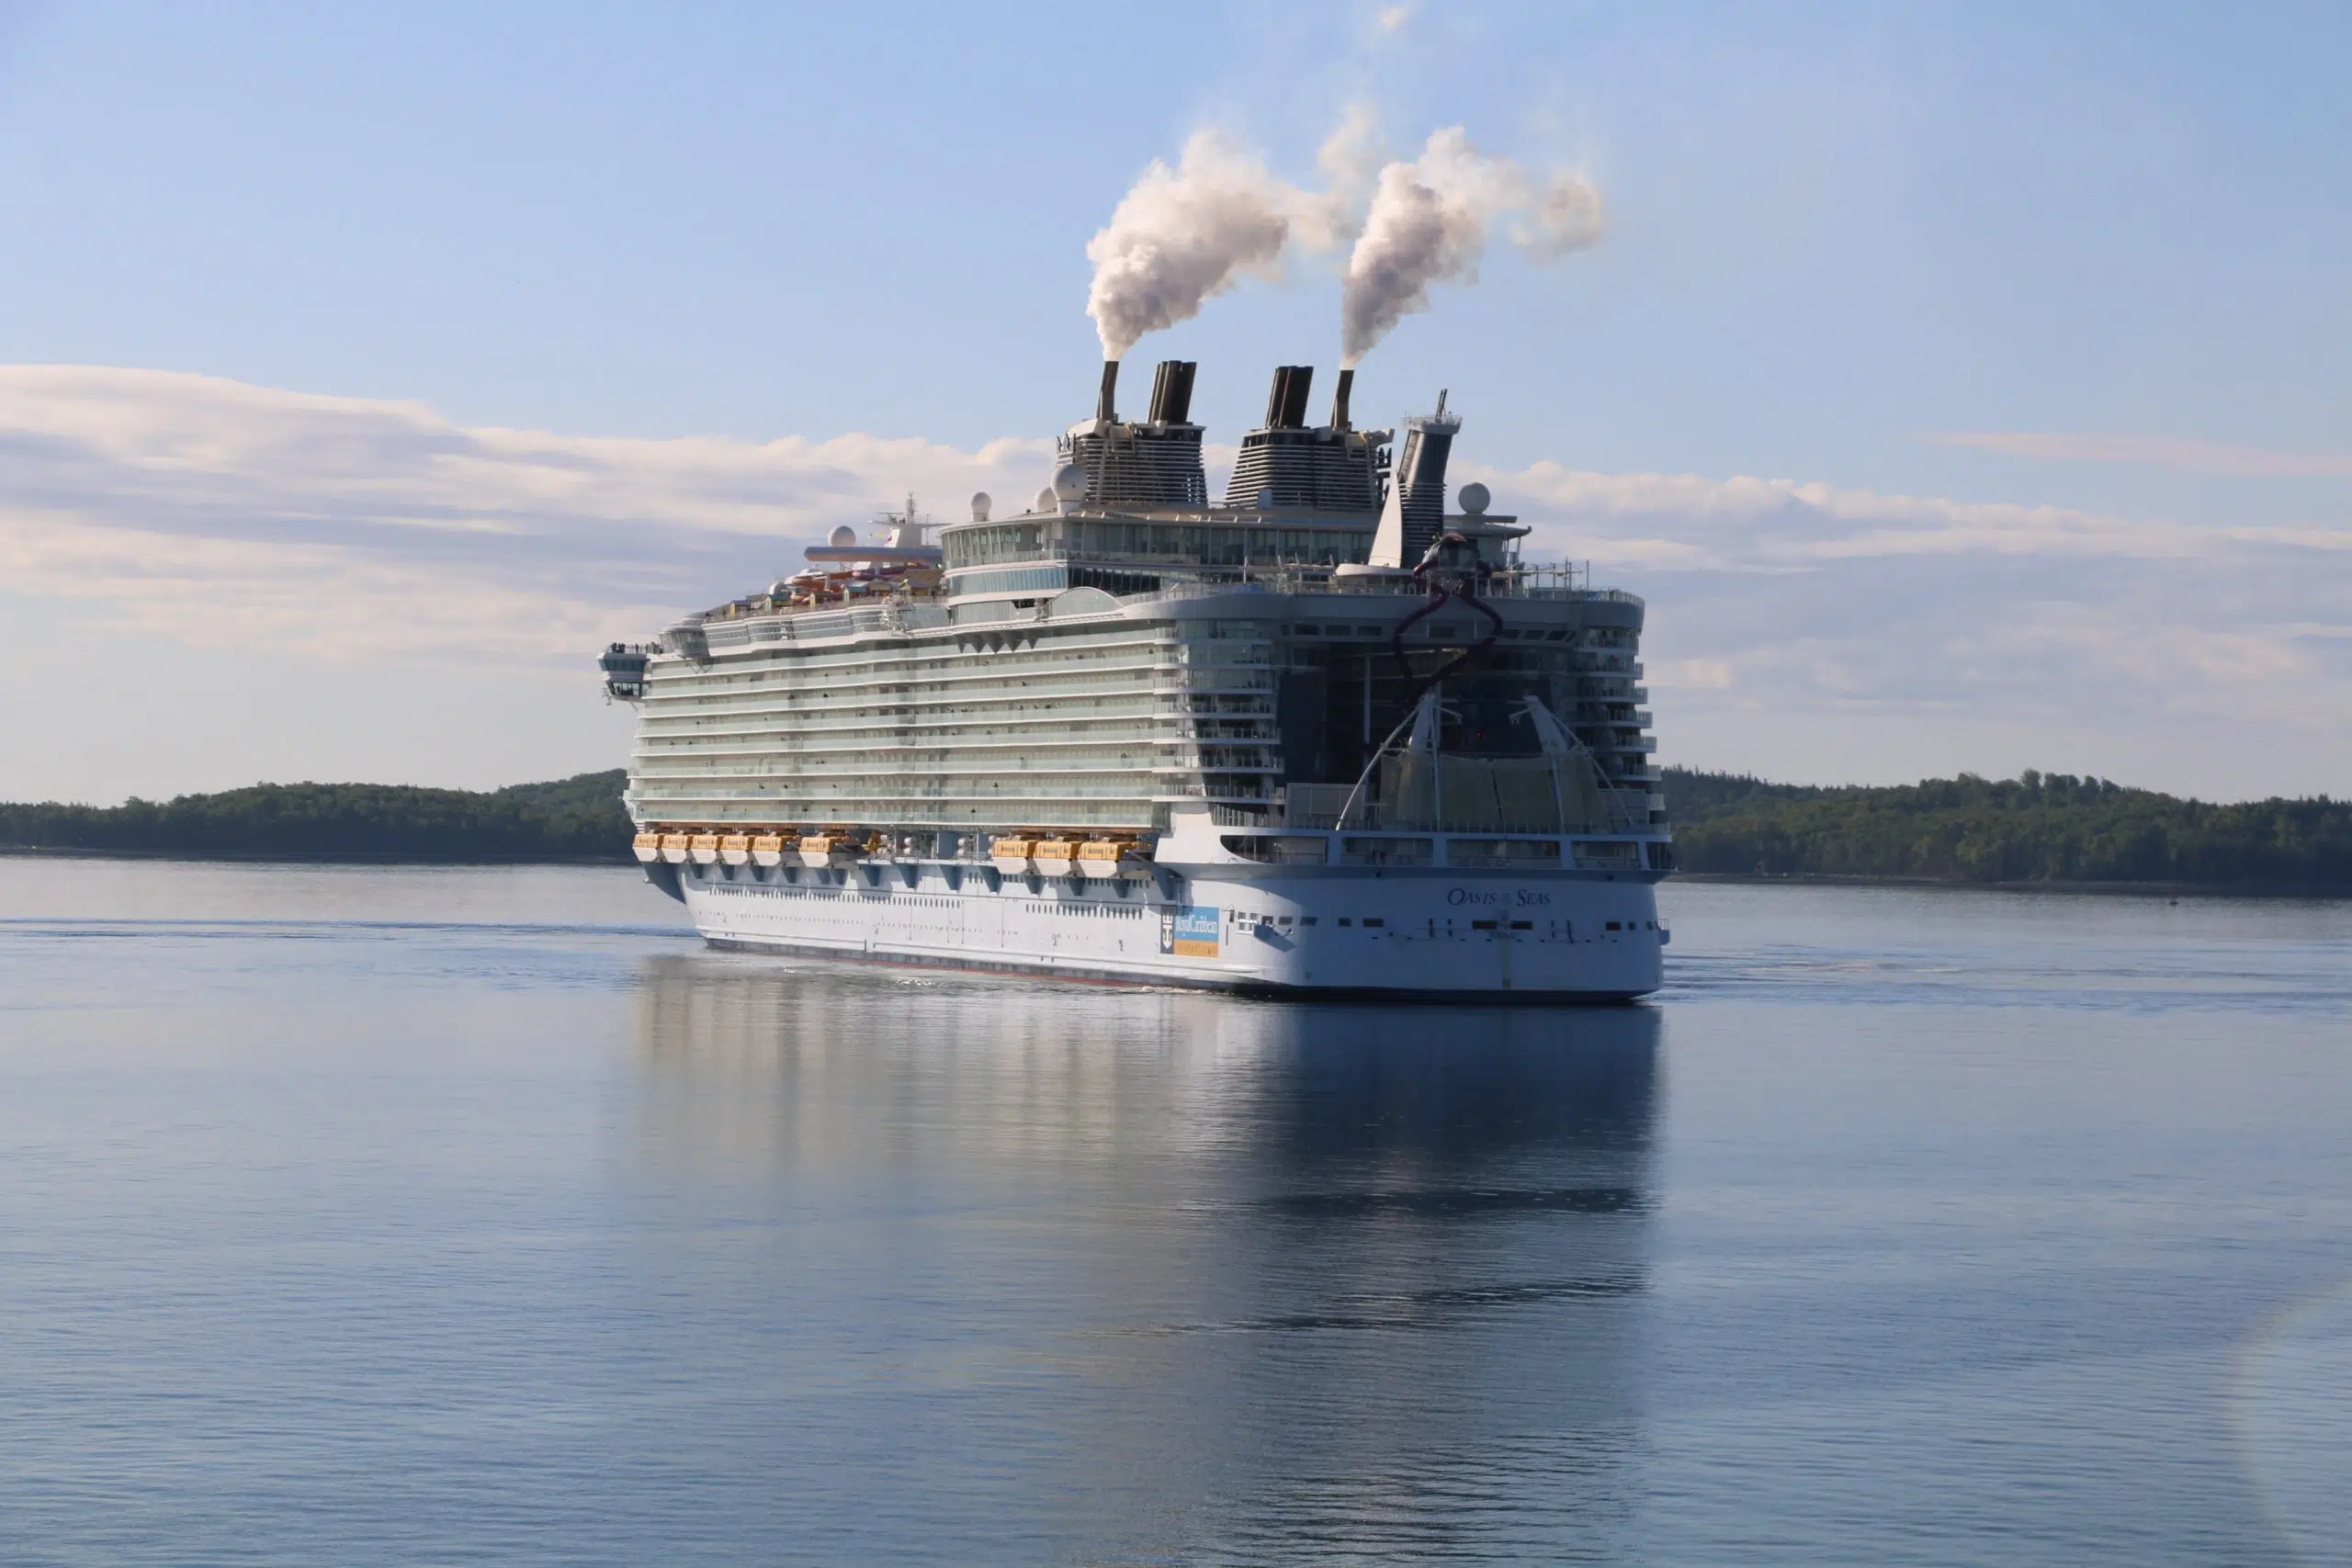 Halifax one of world’s largest cruise ships Surge 105